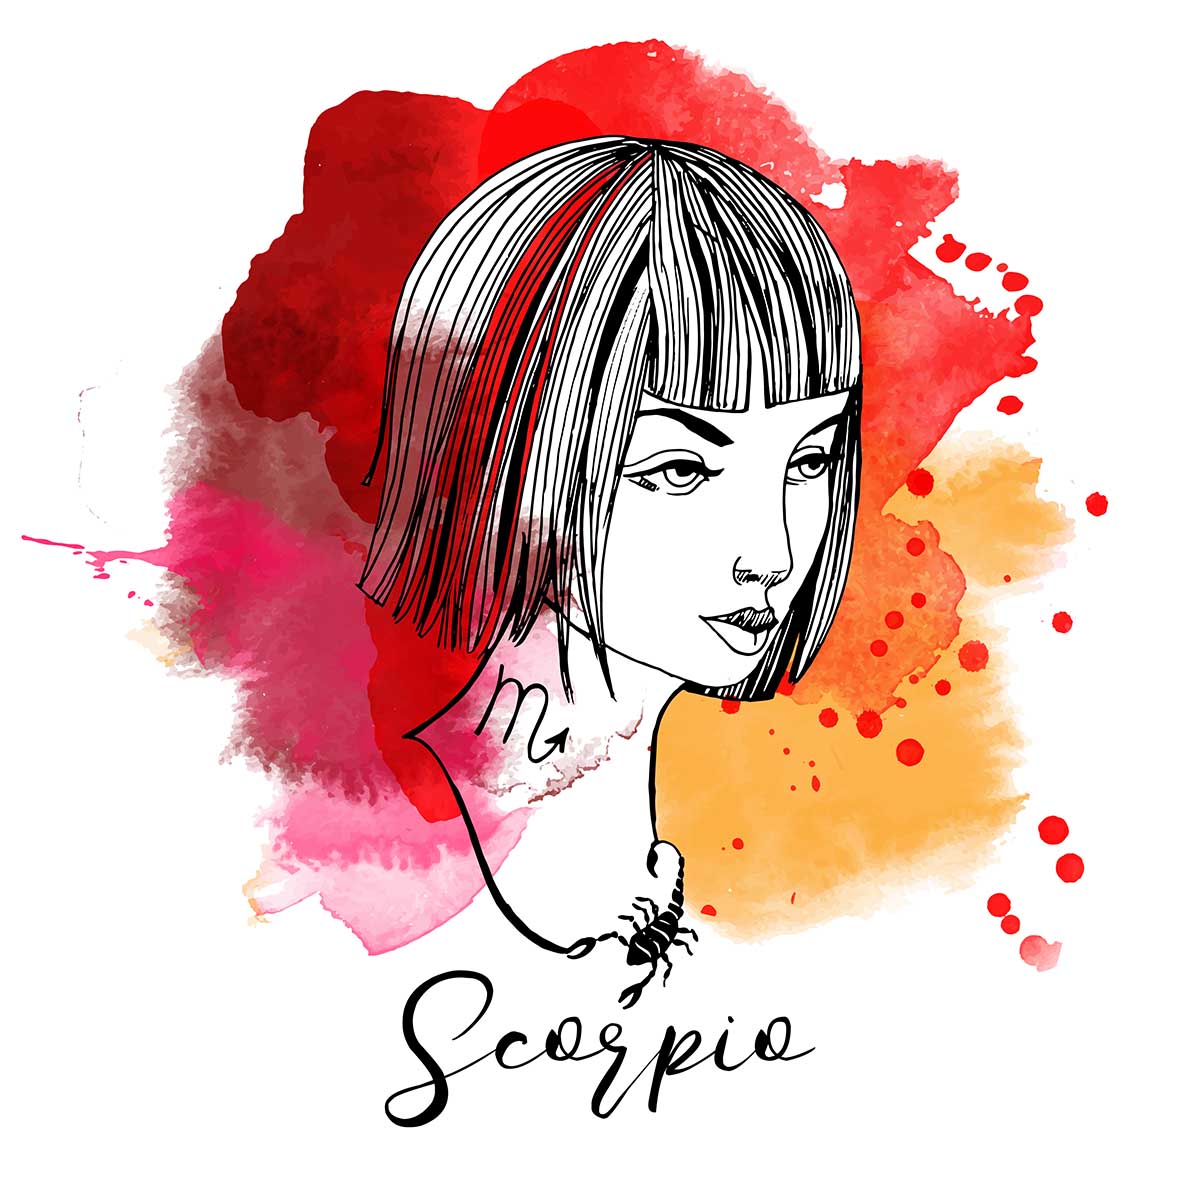 watercolor illustration of Scorpio